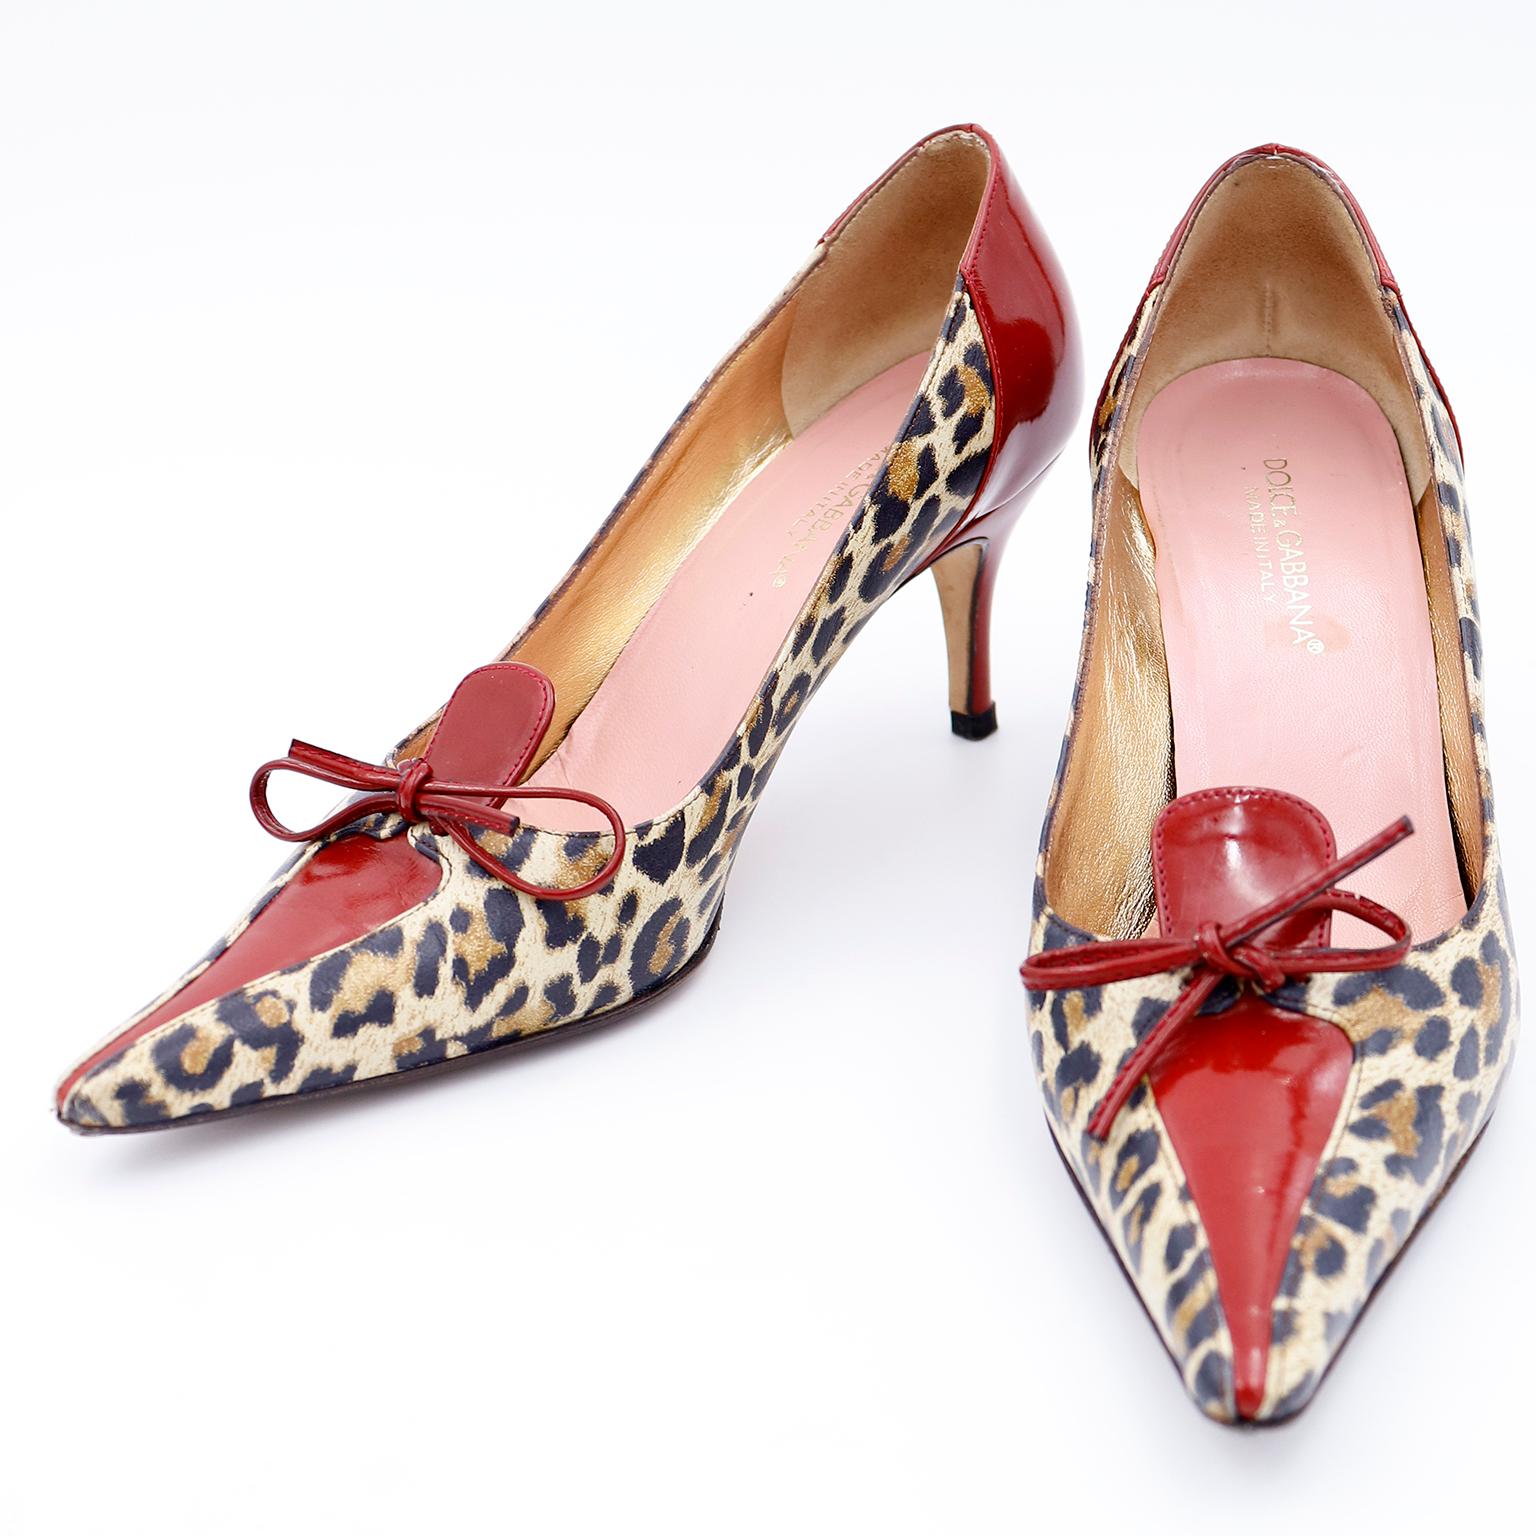 dolce and gabbana cheetah shoes